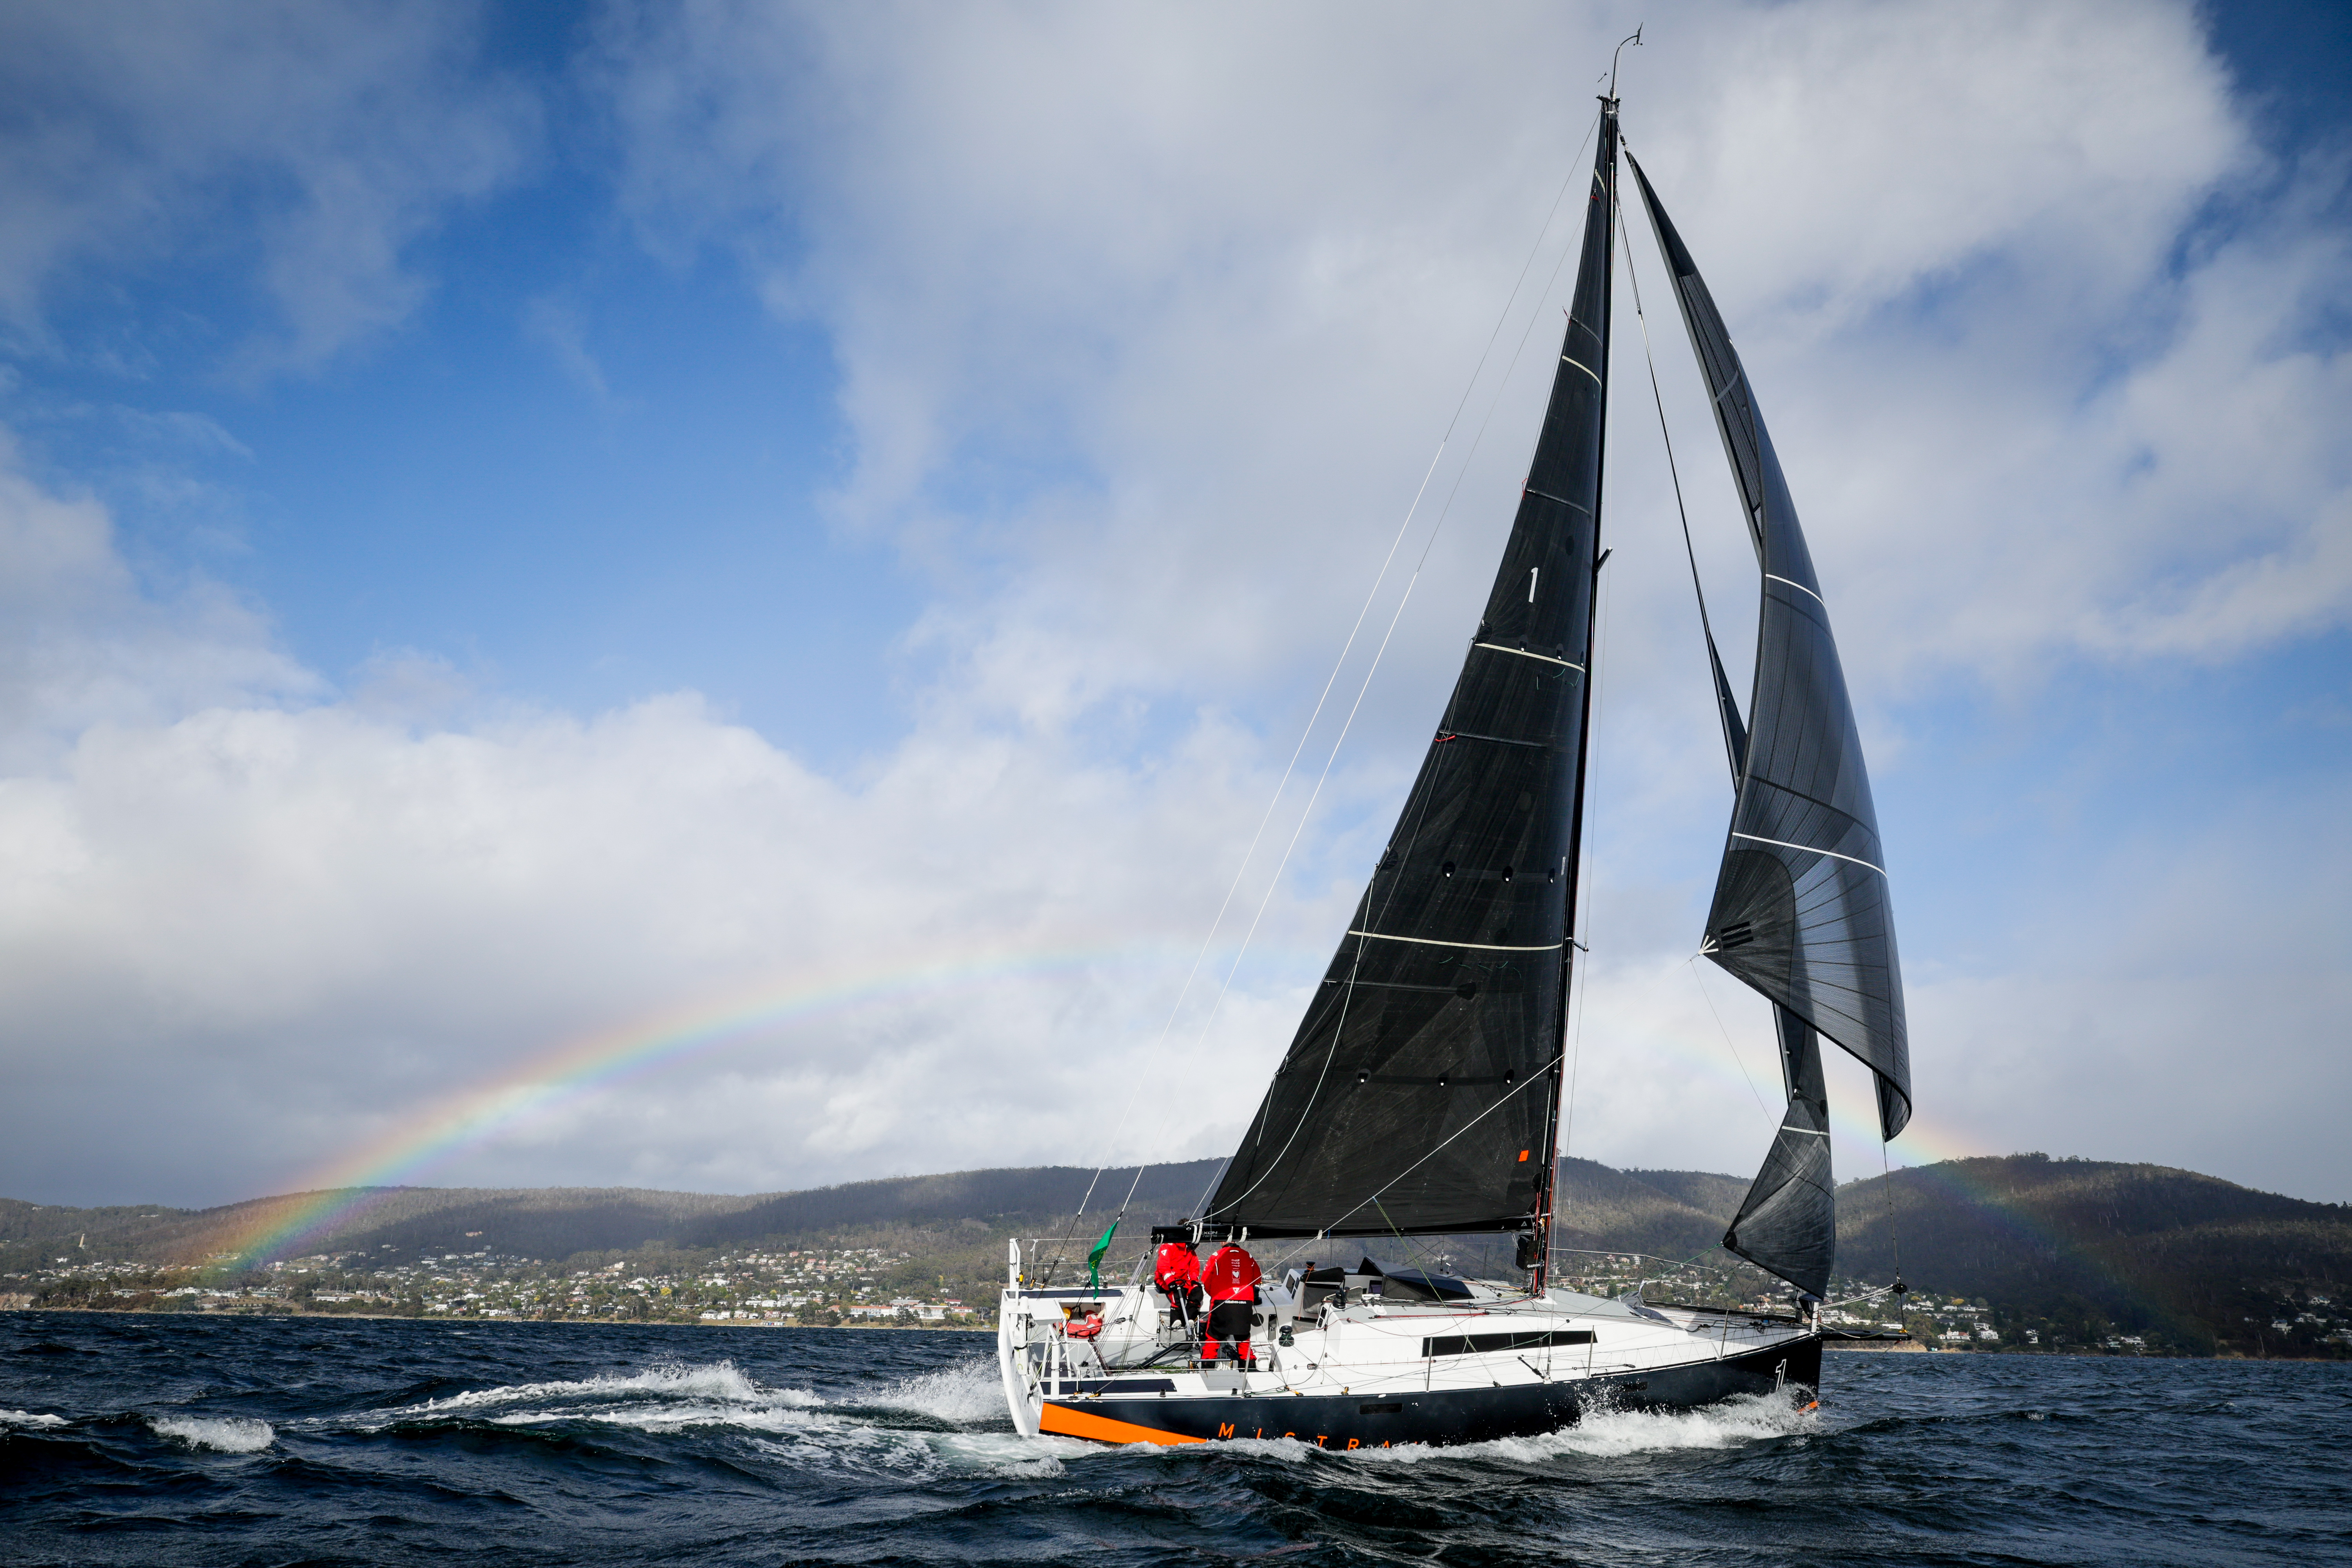 who won the last sydney to hobart yacht race